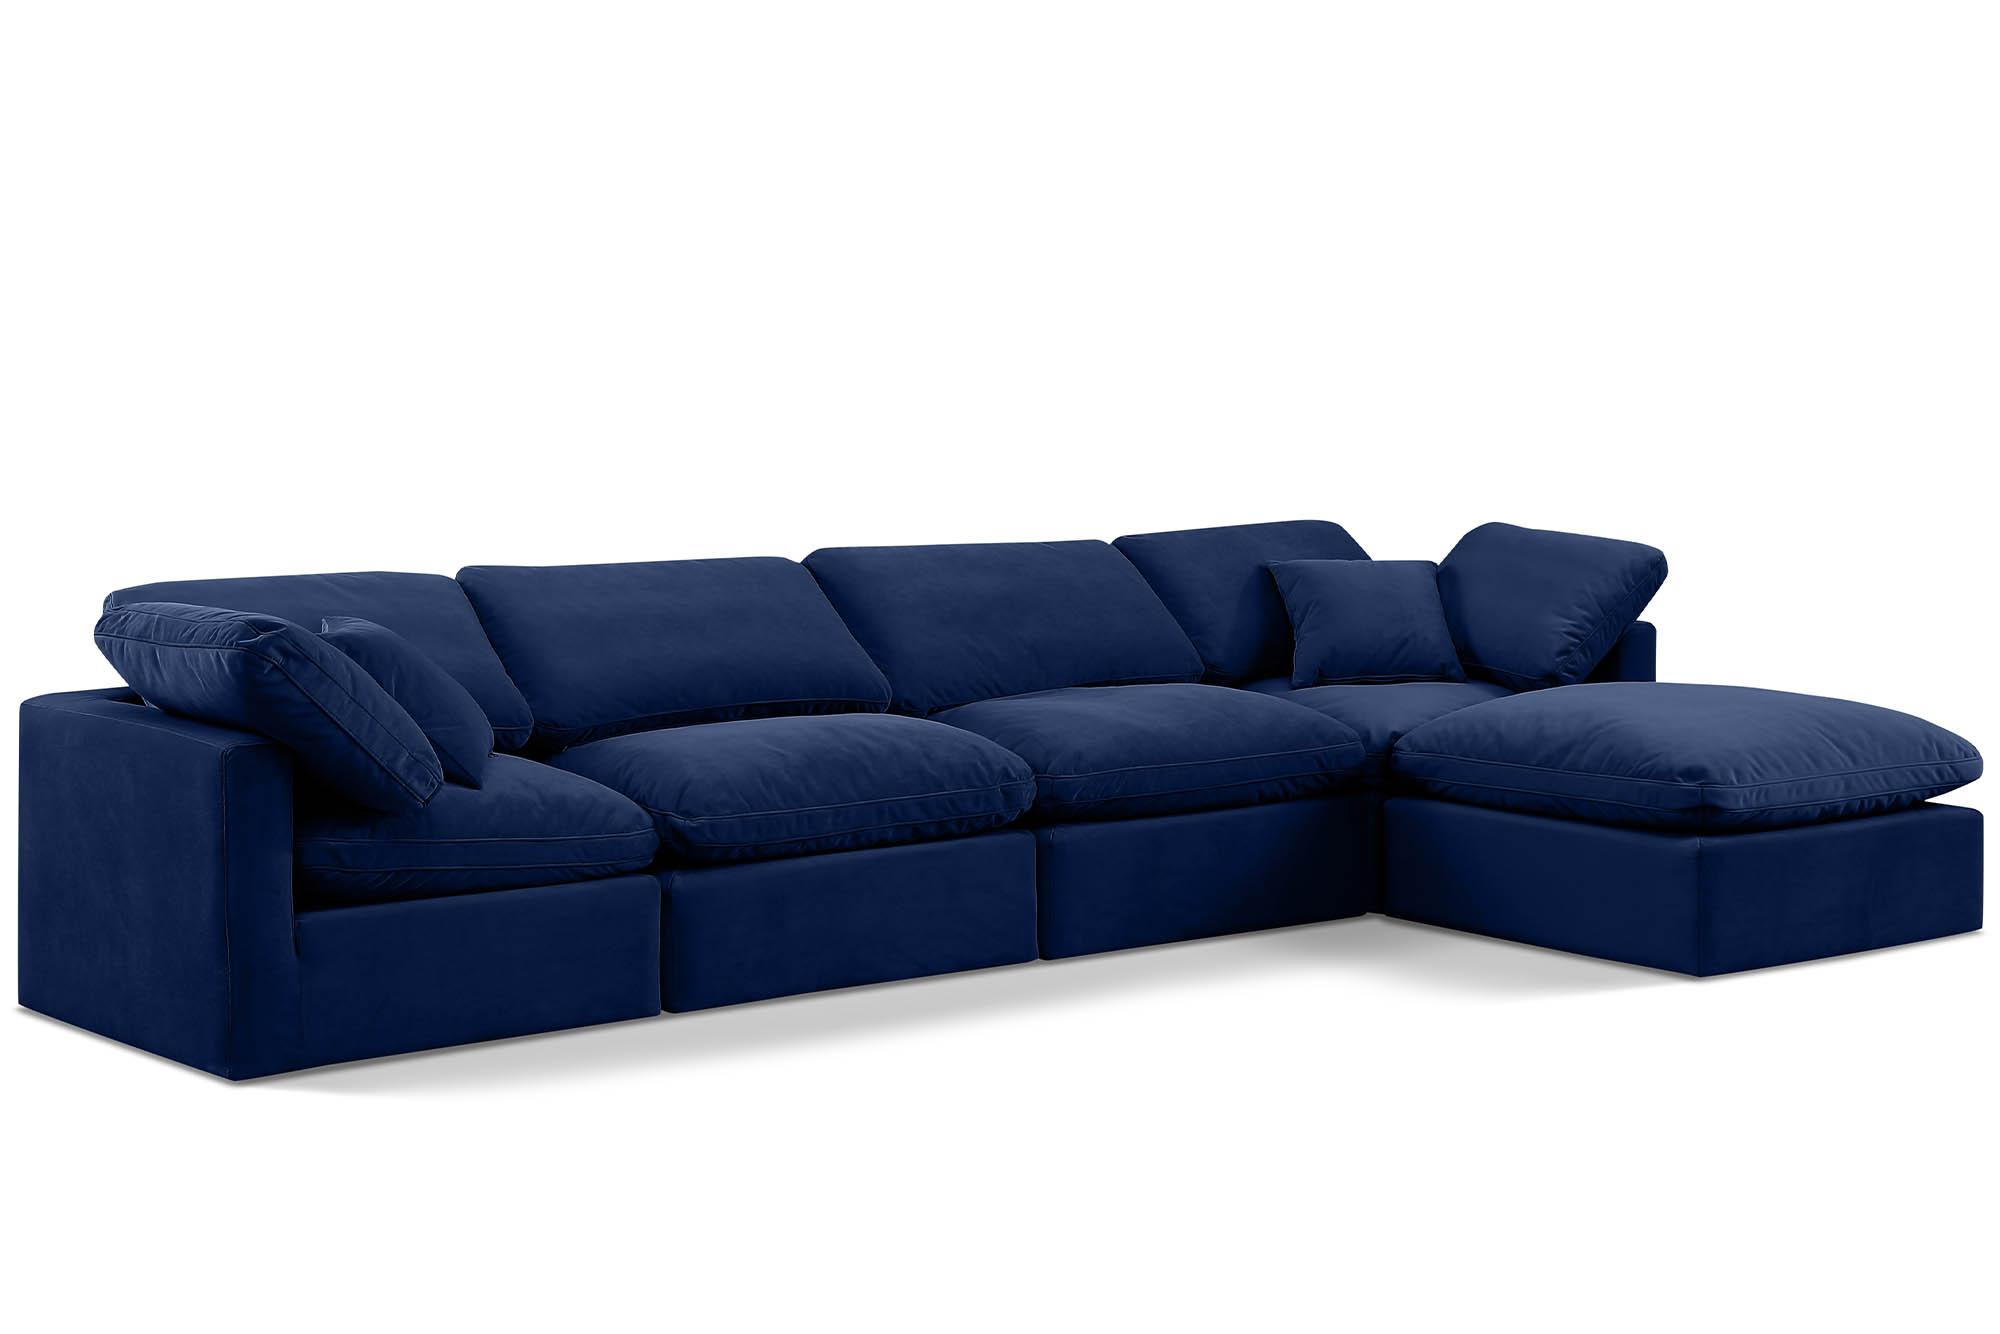 Contemporary, Modern Modular Sectional Sofa INDULGE 147Navy-Sec5A 147Navy-Sec5A in Navy Velvet